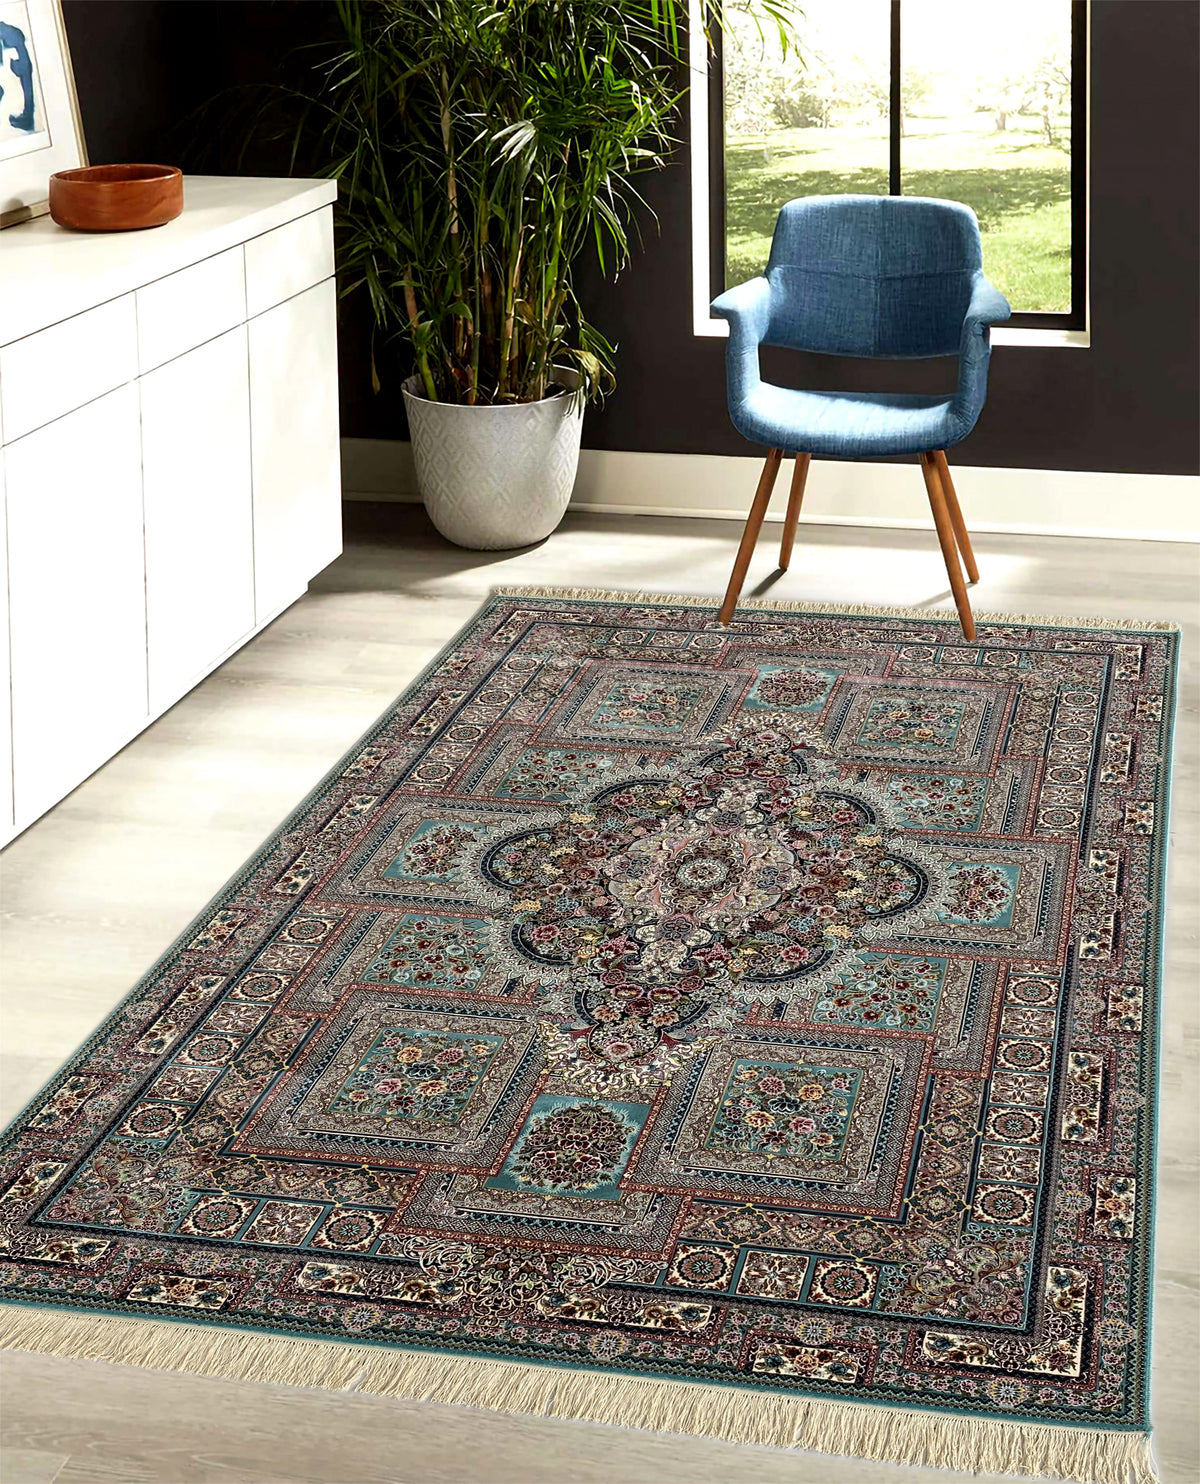 Rugslane Irani Turquoise Color Traditional Design High Quality Super Premium Silk Floral Carpet